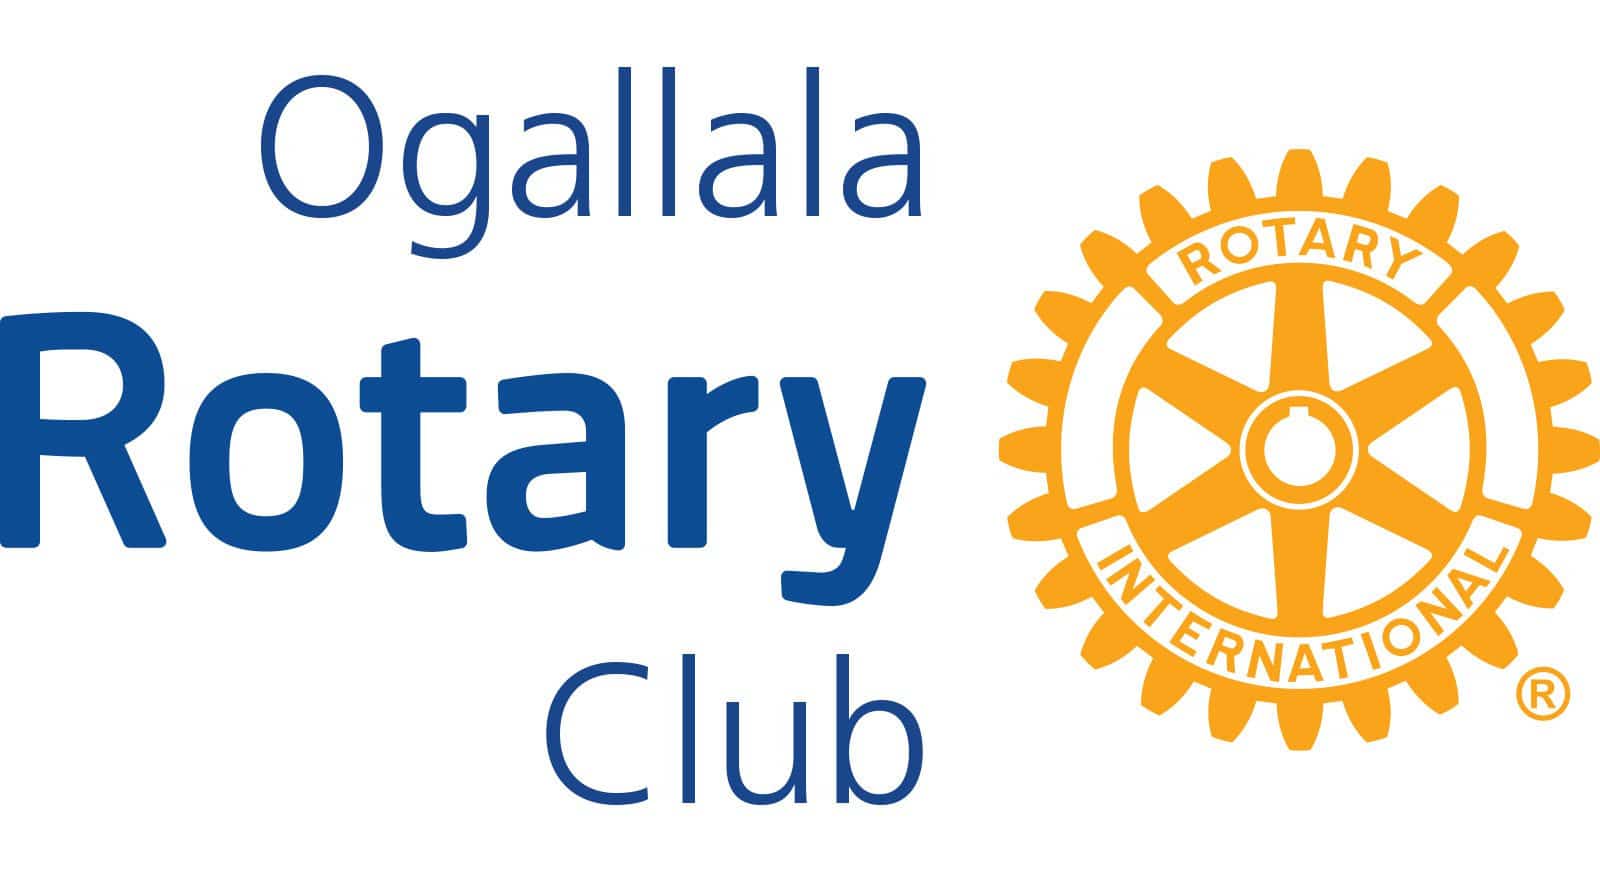 Gothenburg Rotary Club